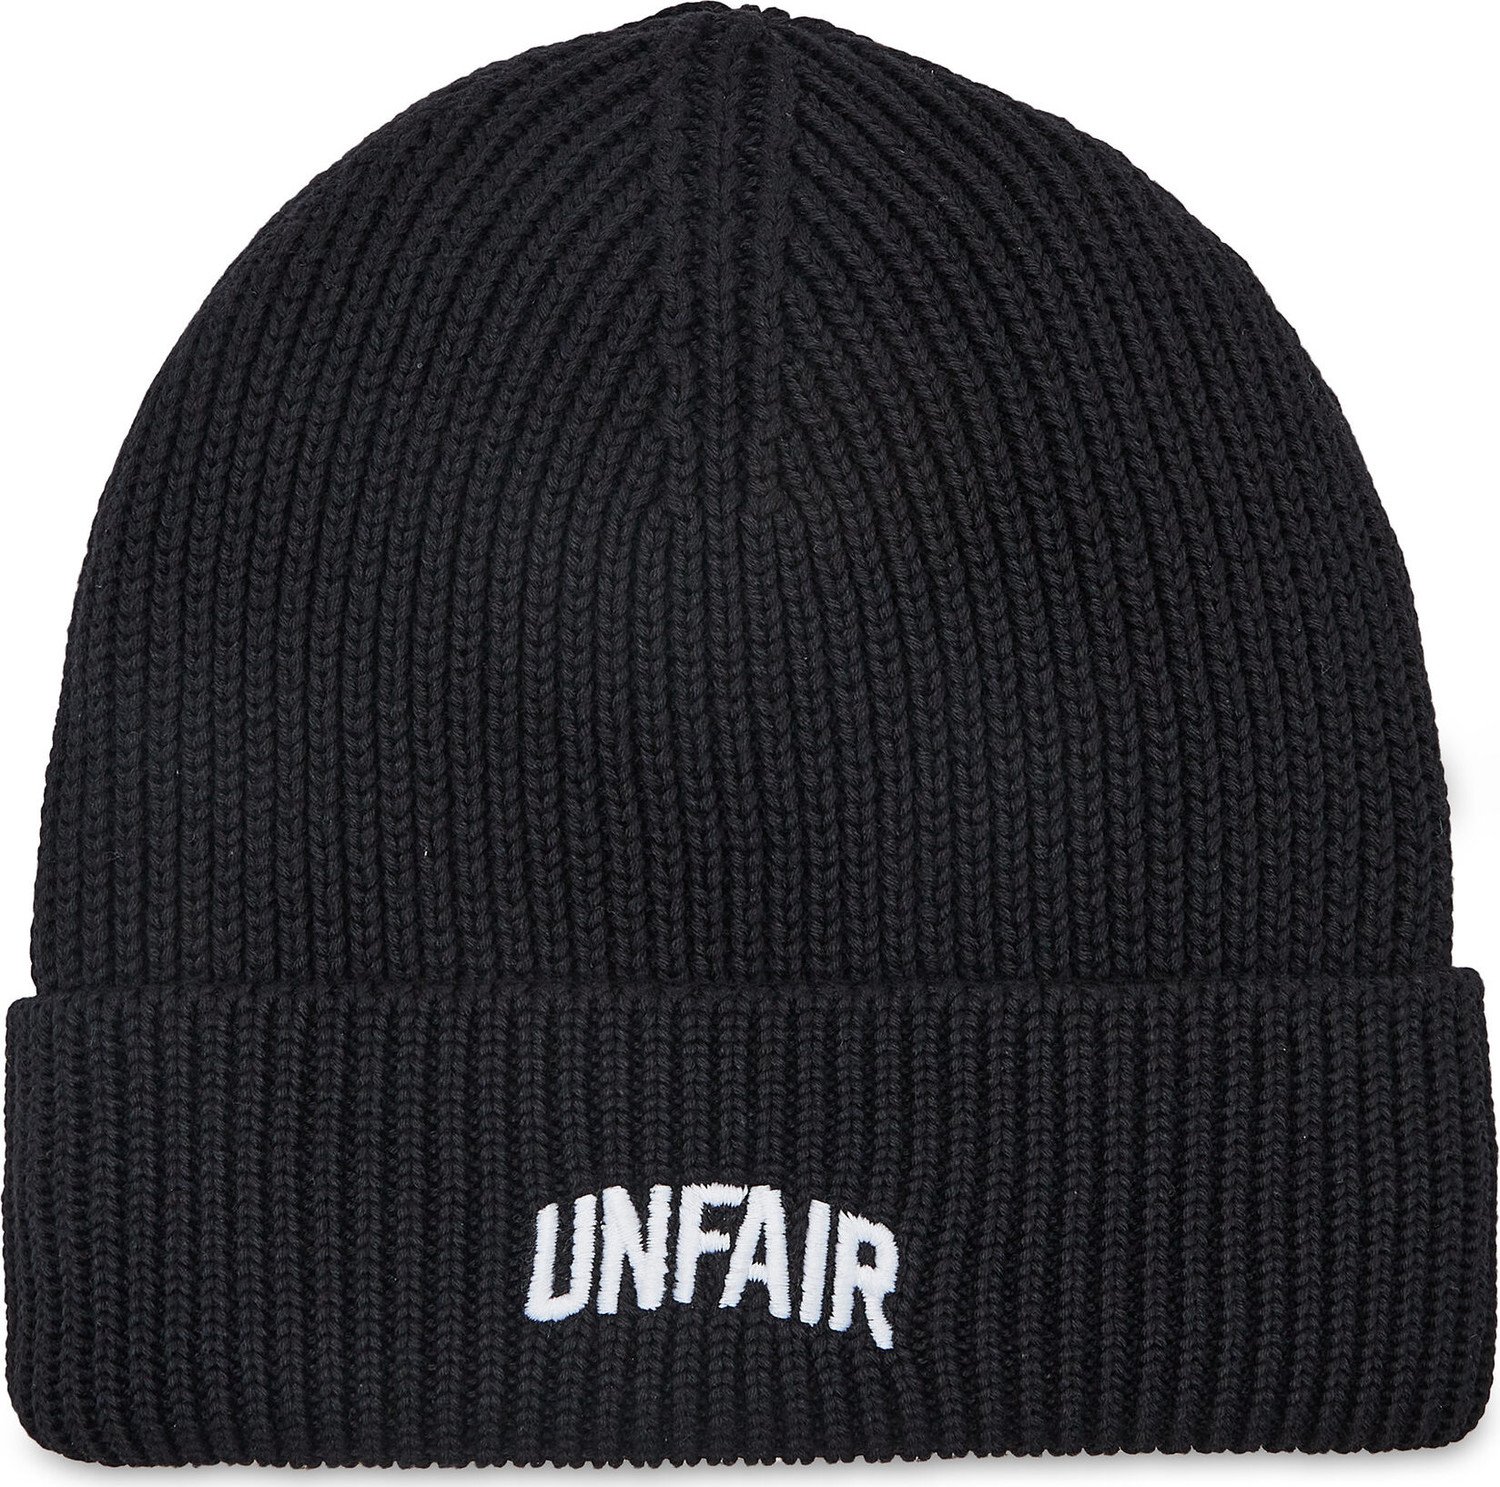 Čepice Unfair Athletics Organic Knit UNFR22-159 Black